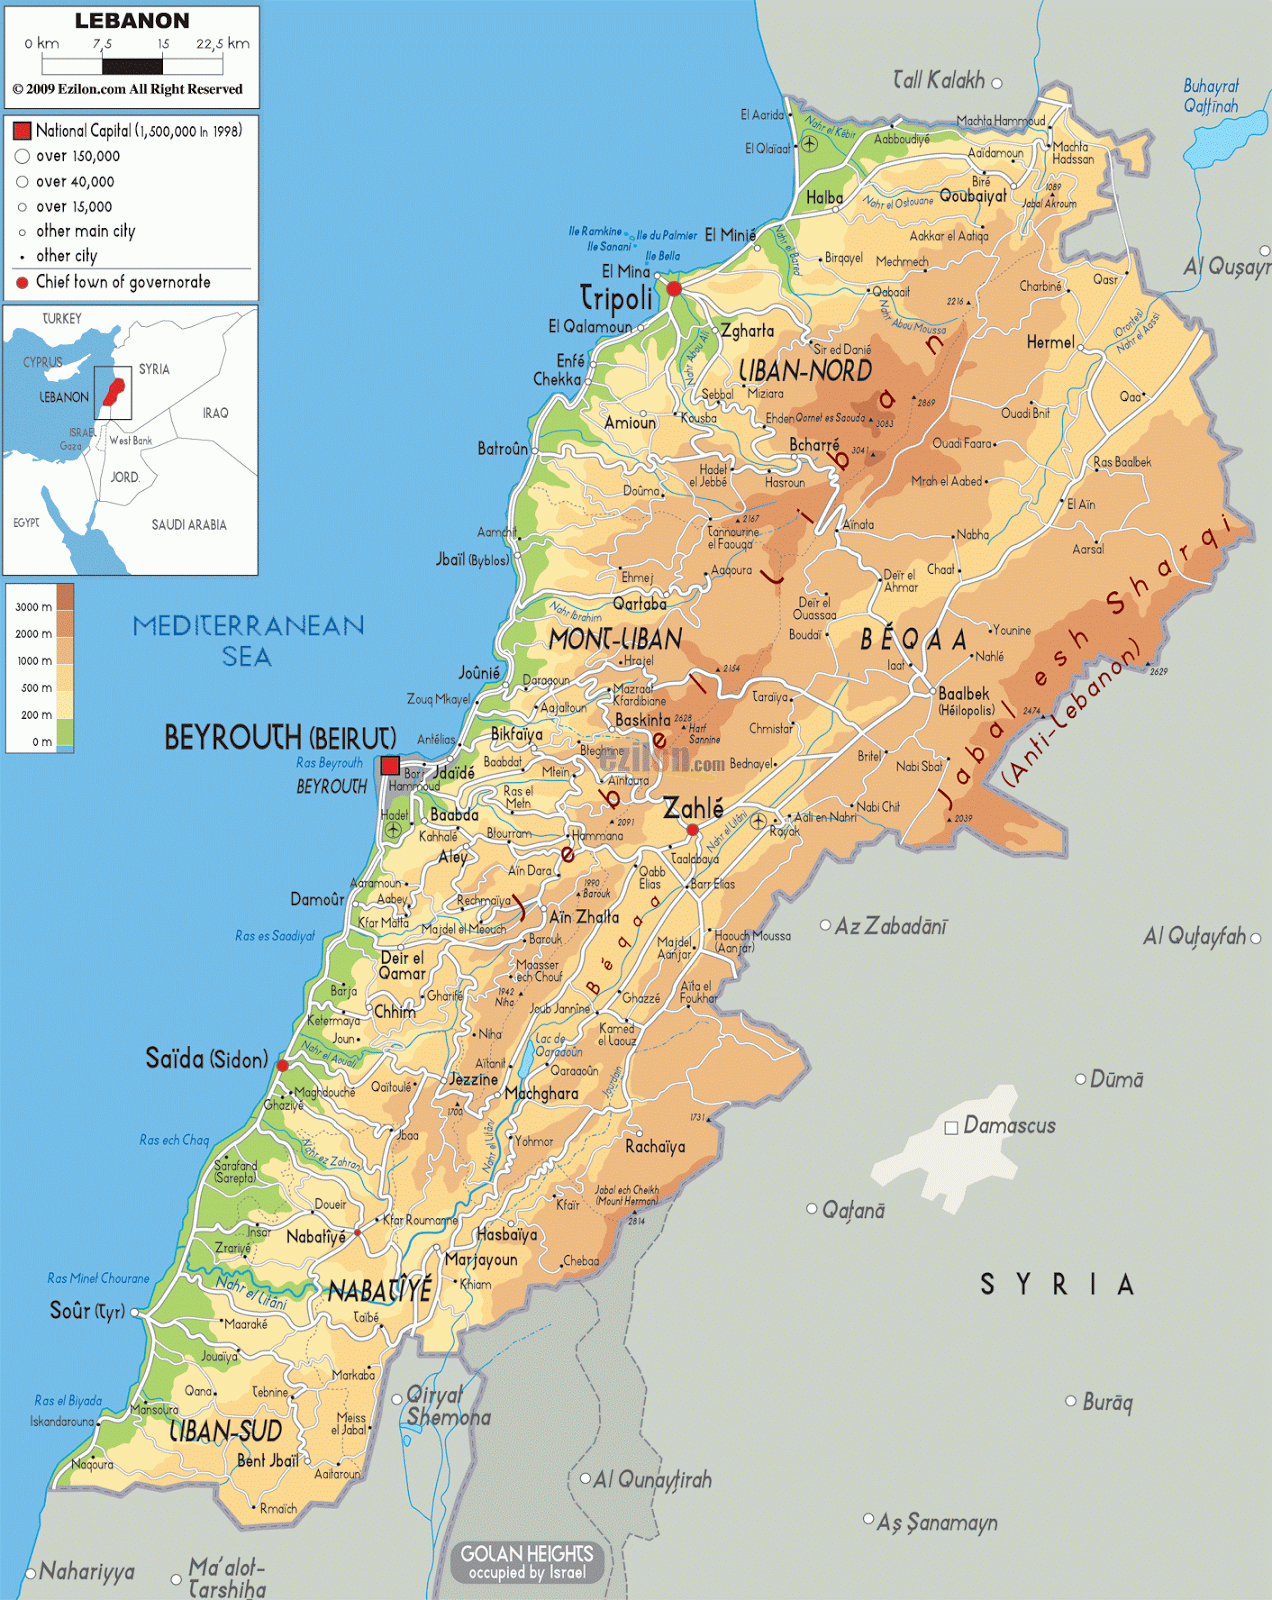 MAPS OF LEBANON